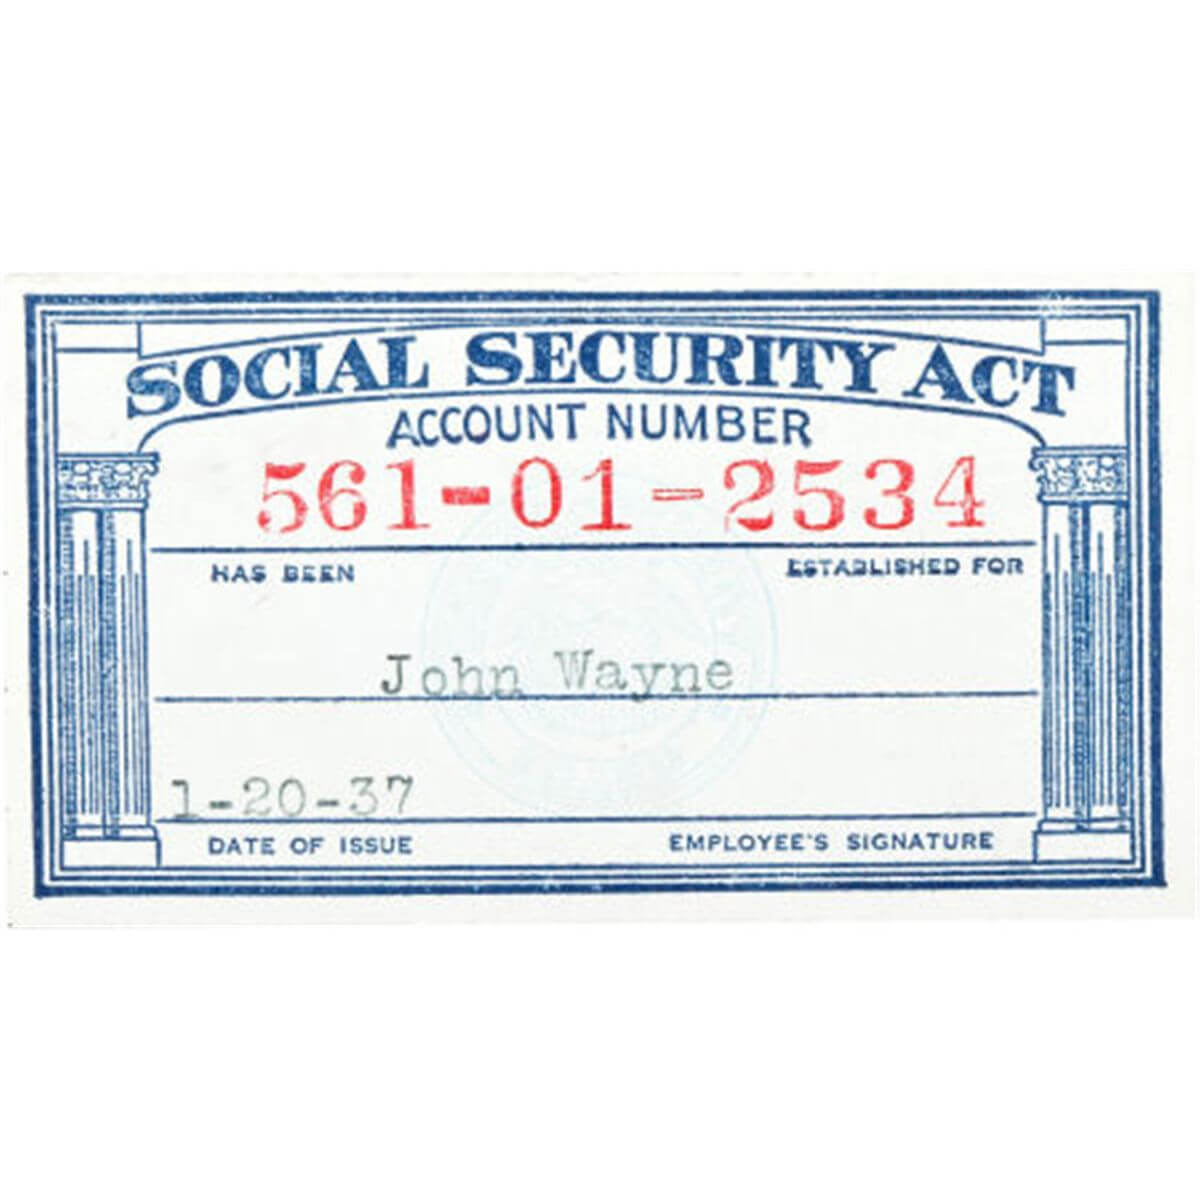 Social Security Card Templates. Social Security Template In Social Security Card Template Photoshop